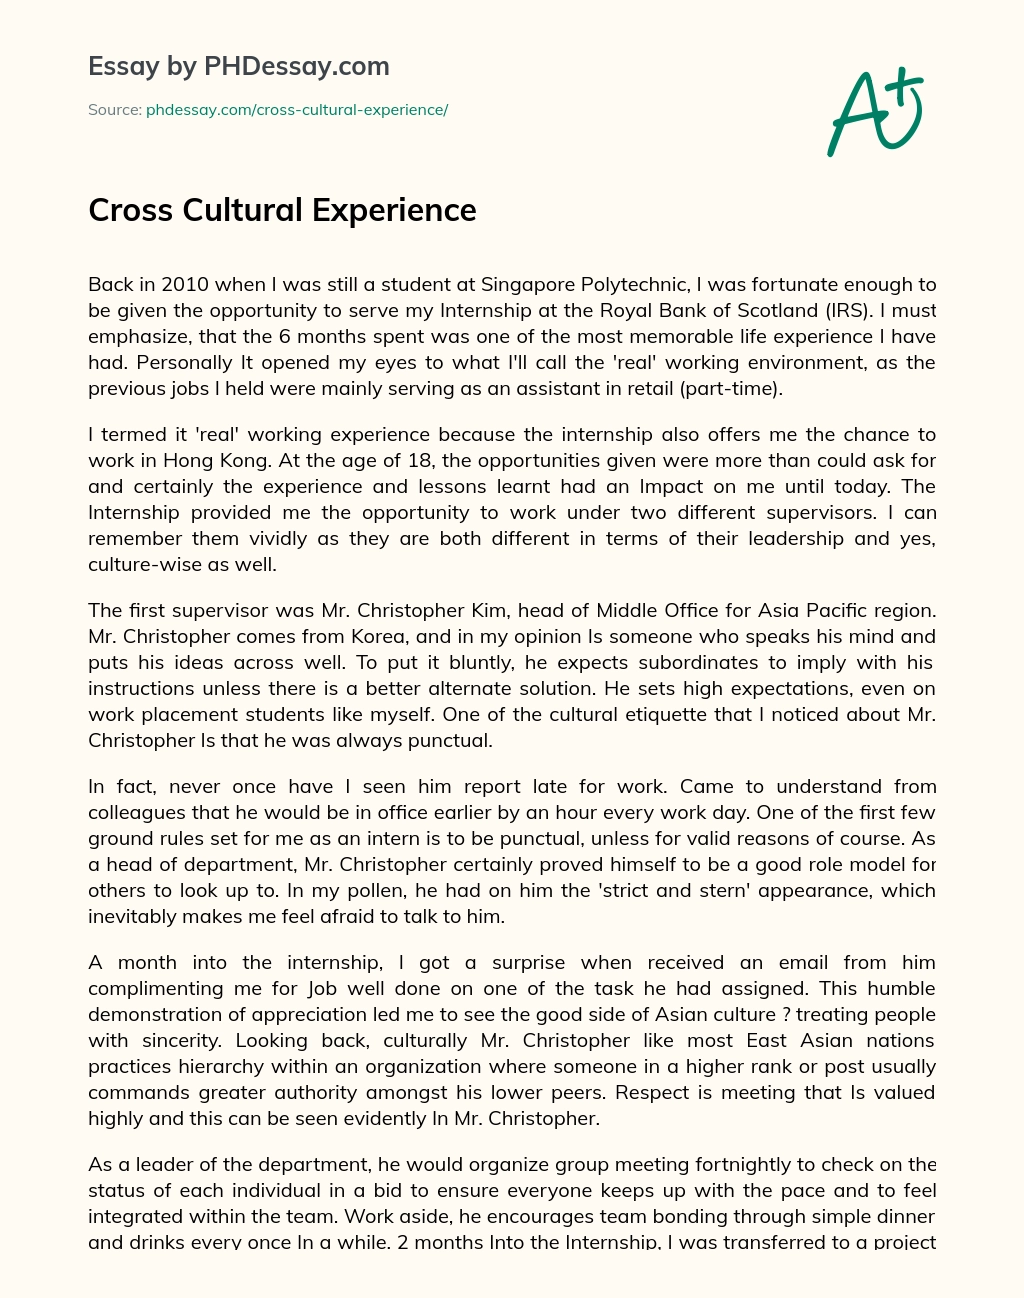 Cross Cultural Experience essay